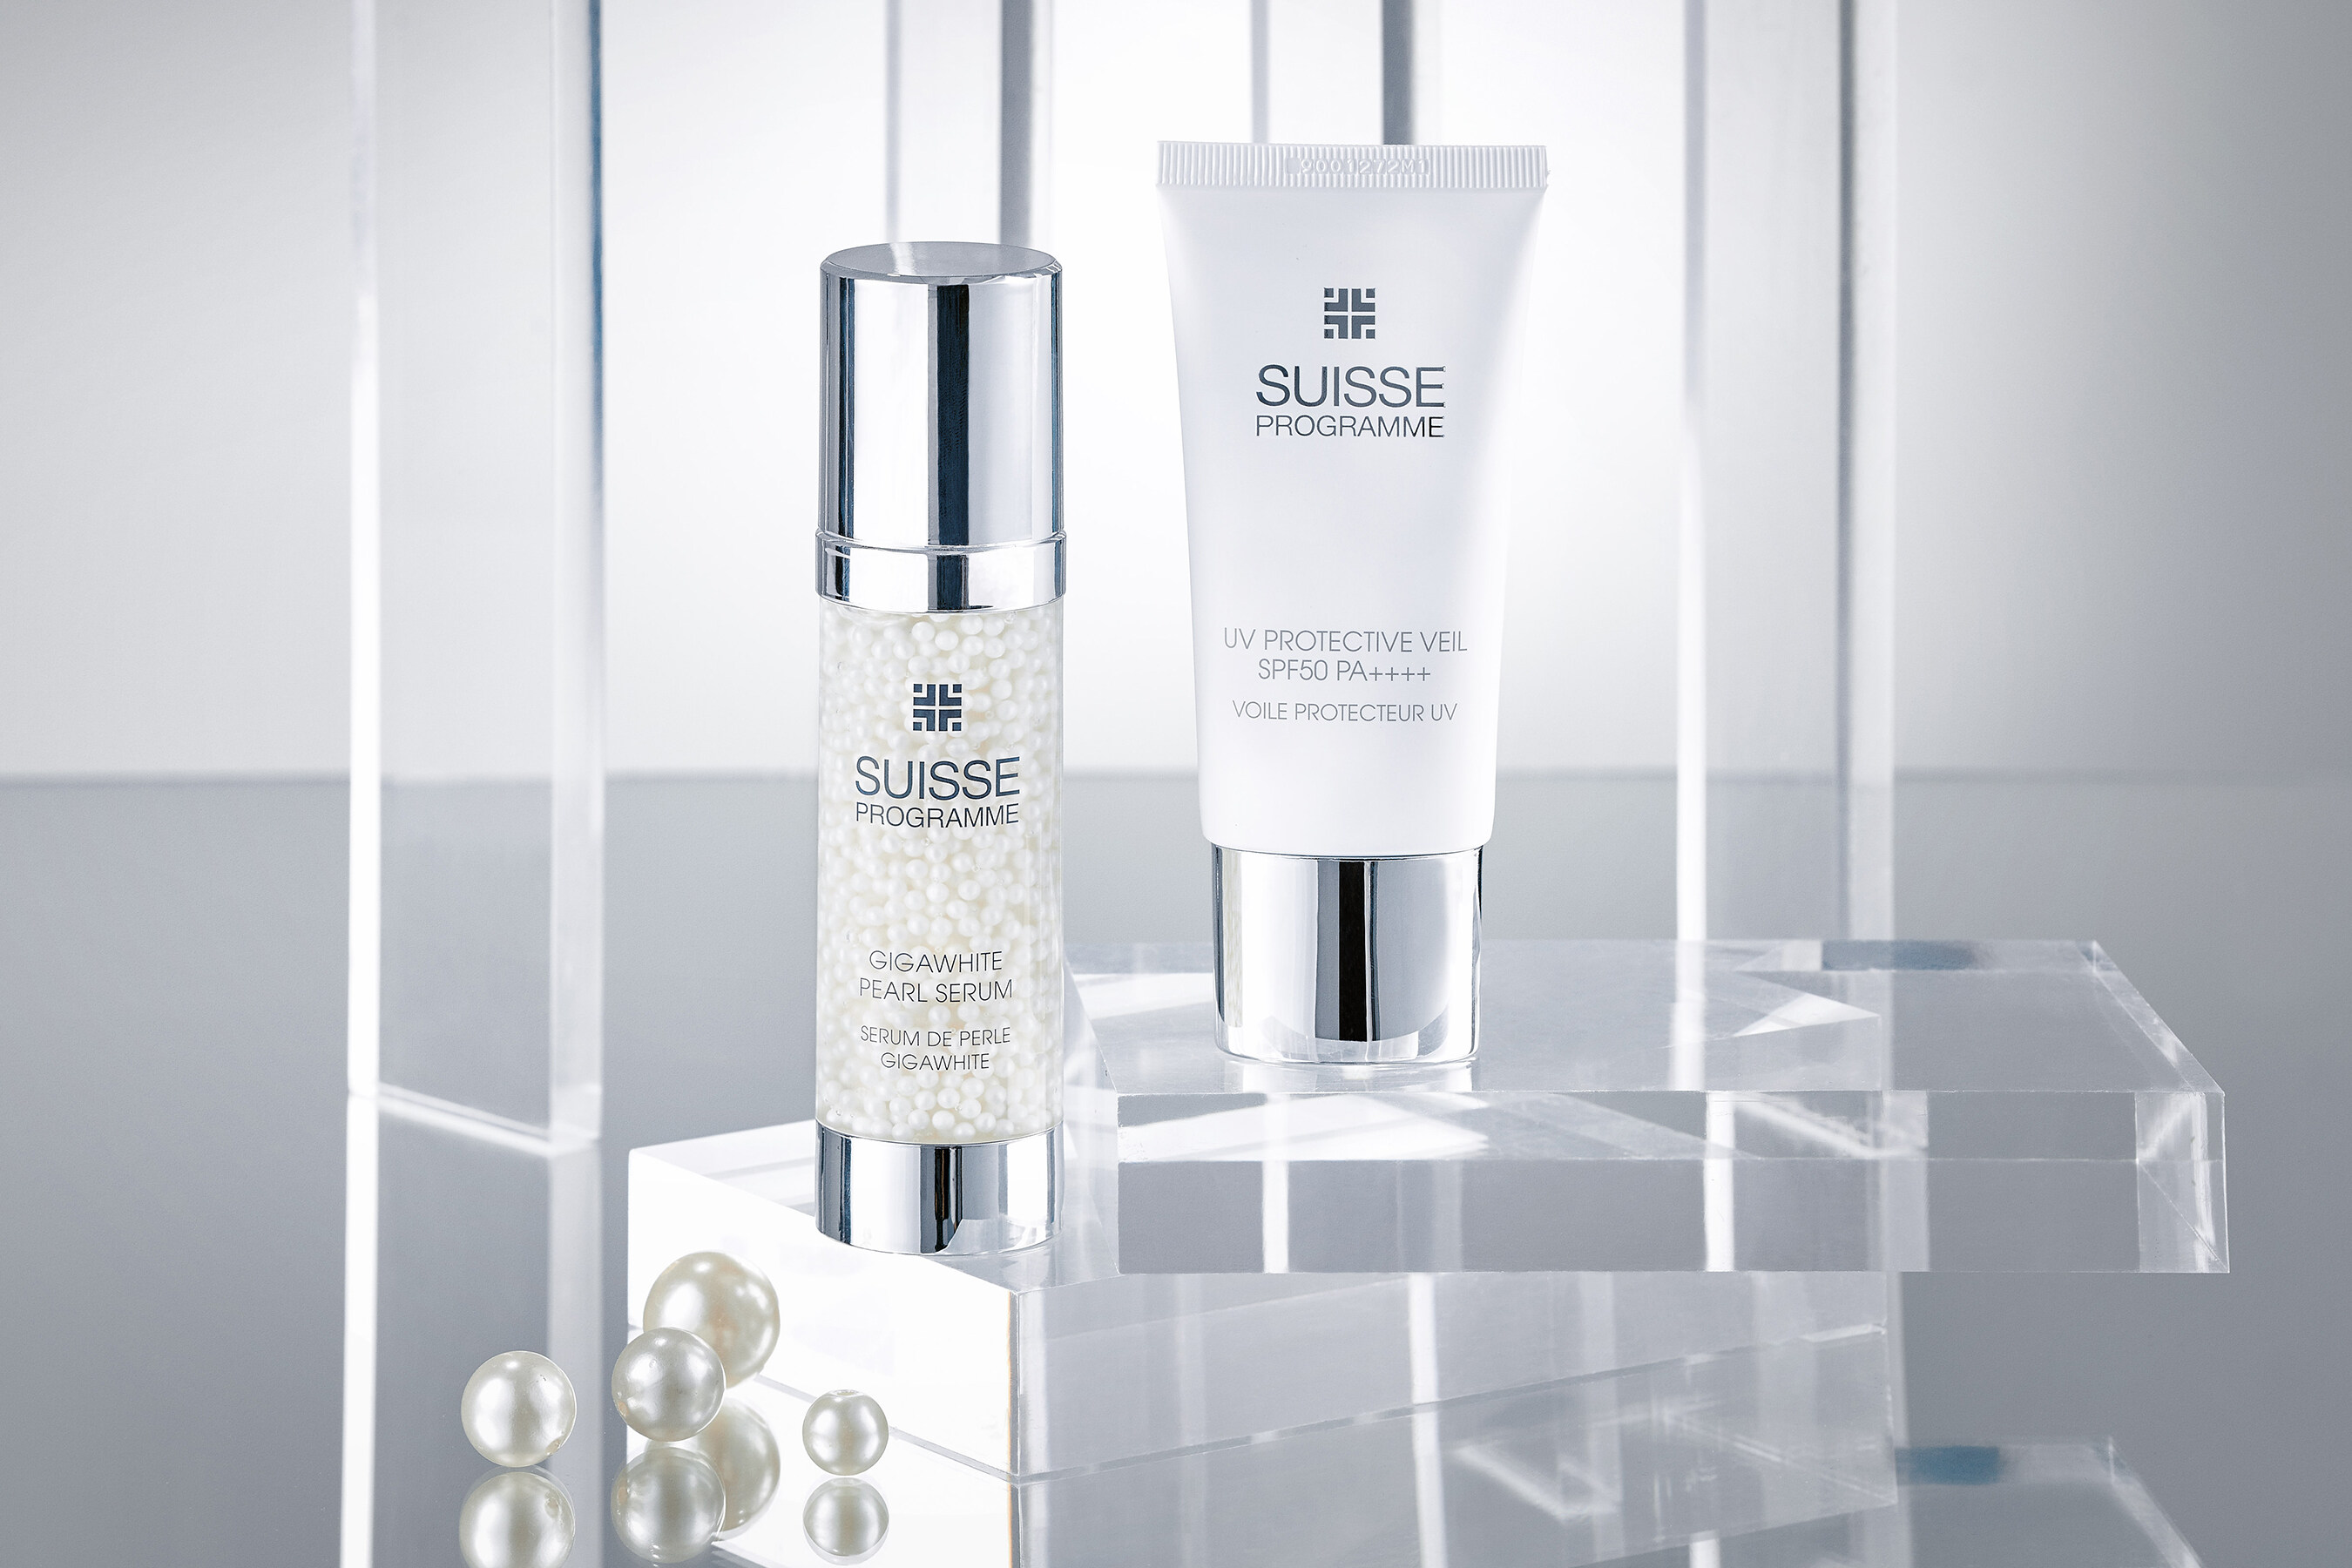 SUISSE PROGRAMME糅合瑞士高科技與傳統美容學精髓，推出全新美白防曬組合。